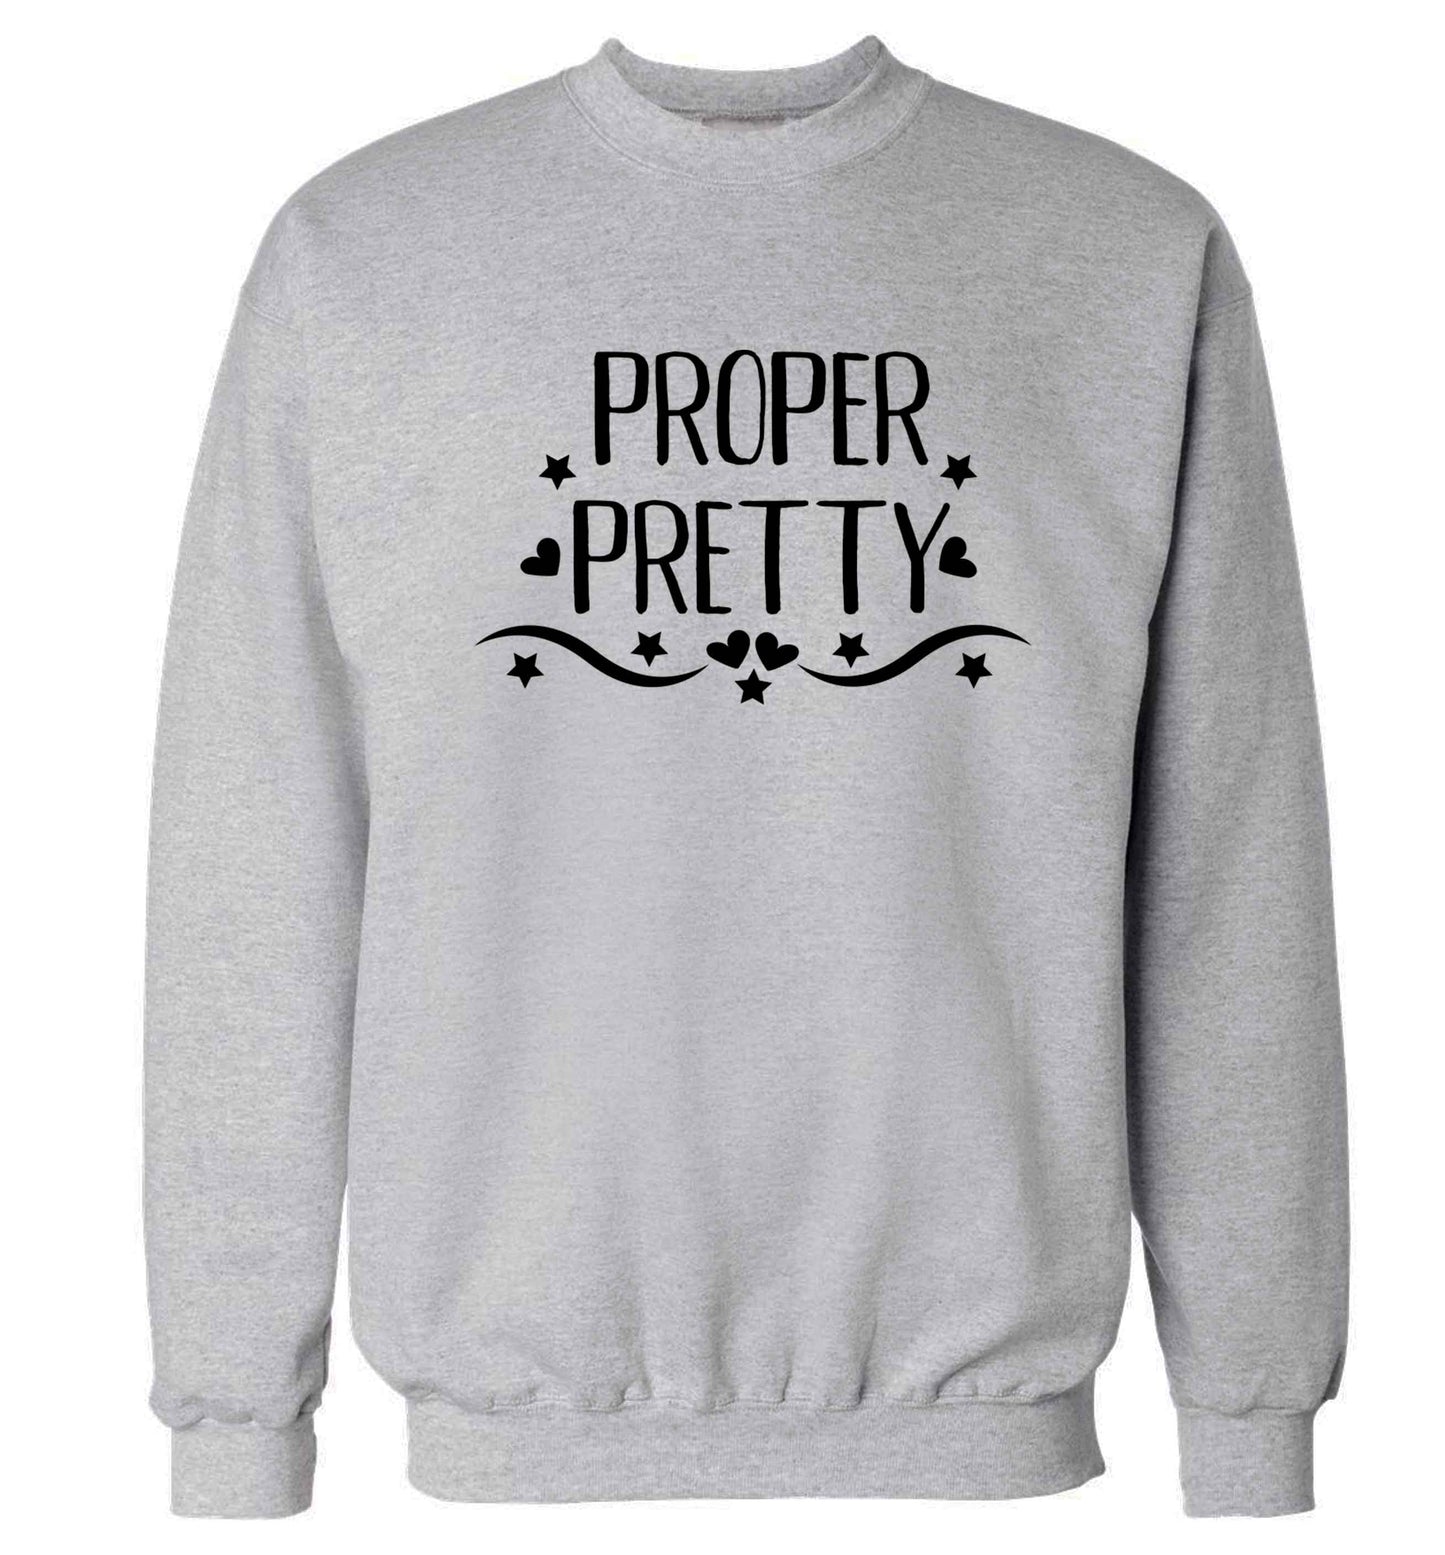 Proper pretty Adult's unisex grey Sweater 2XL